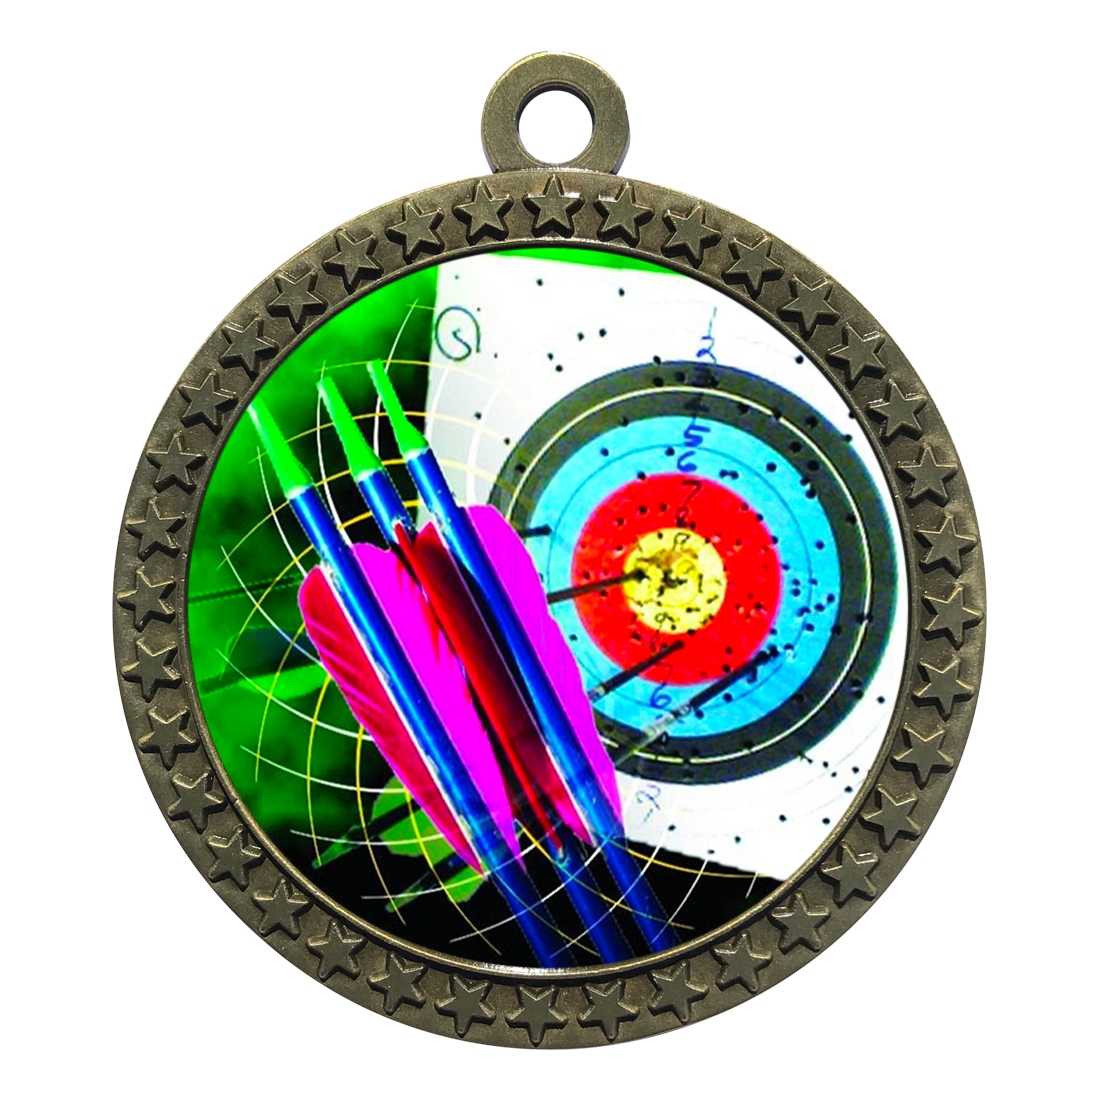 2-1/2" Archery Medal